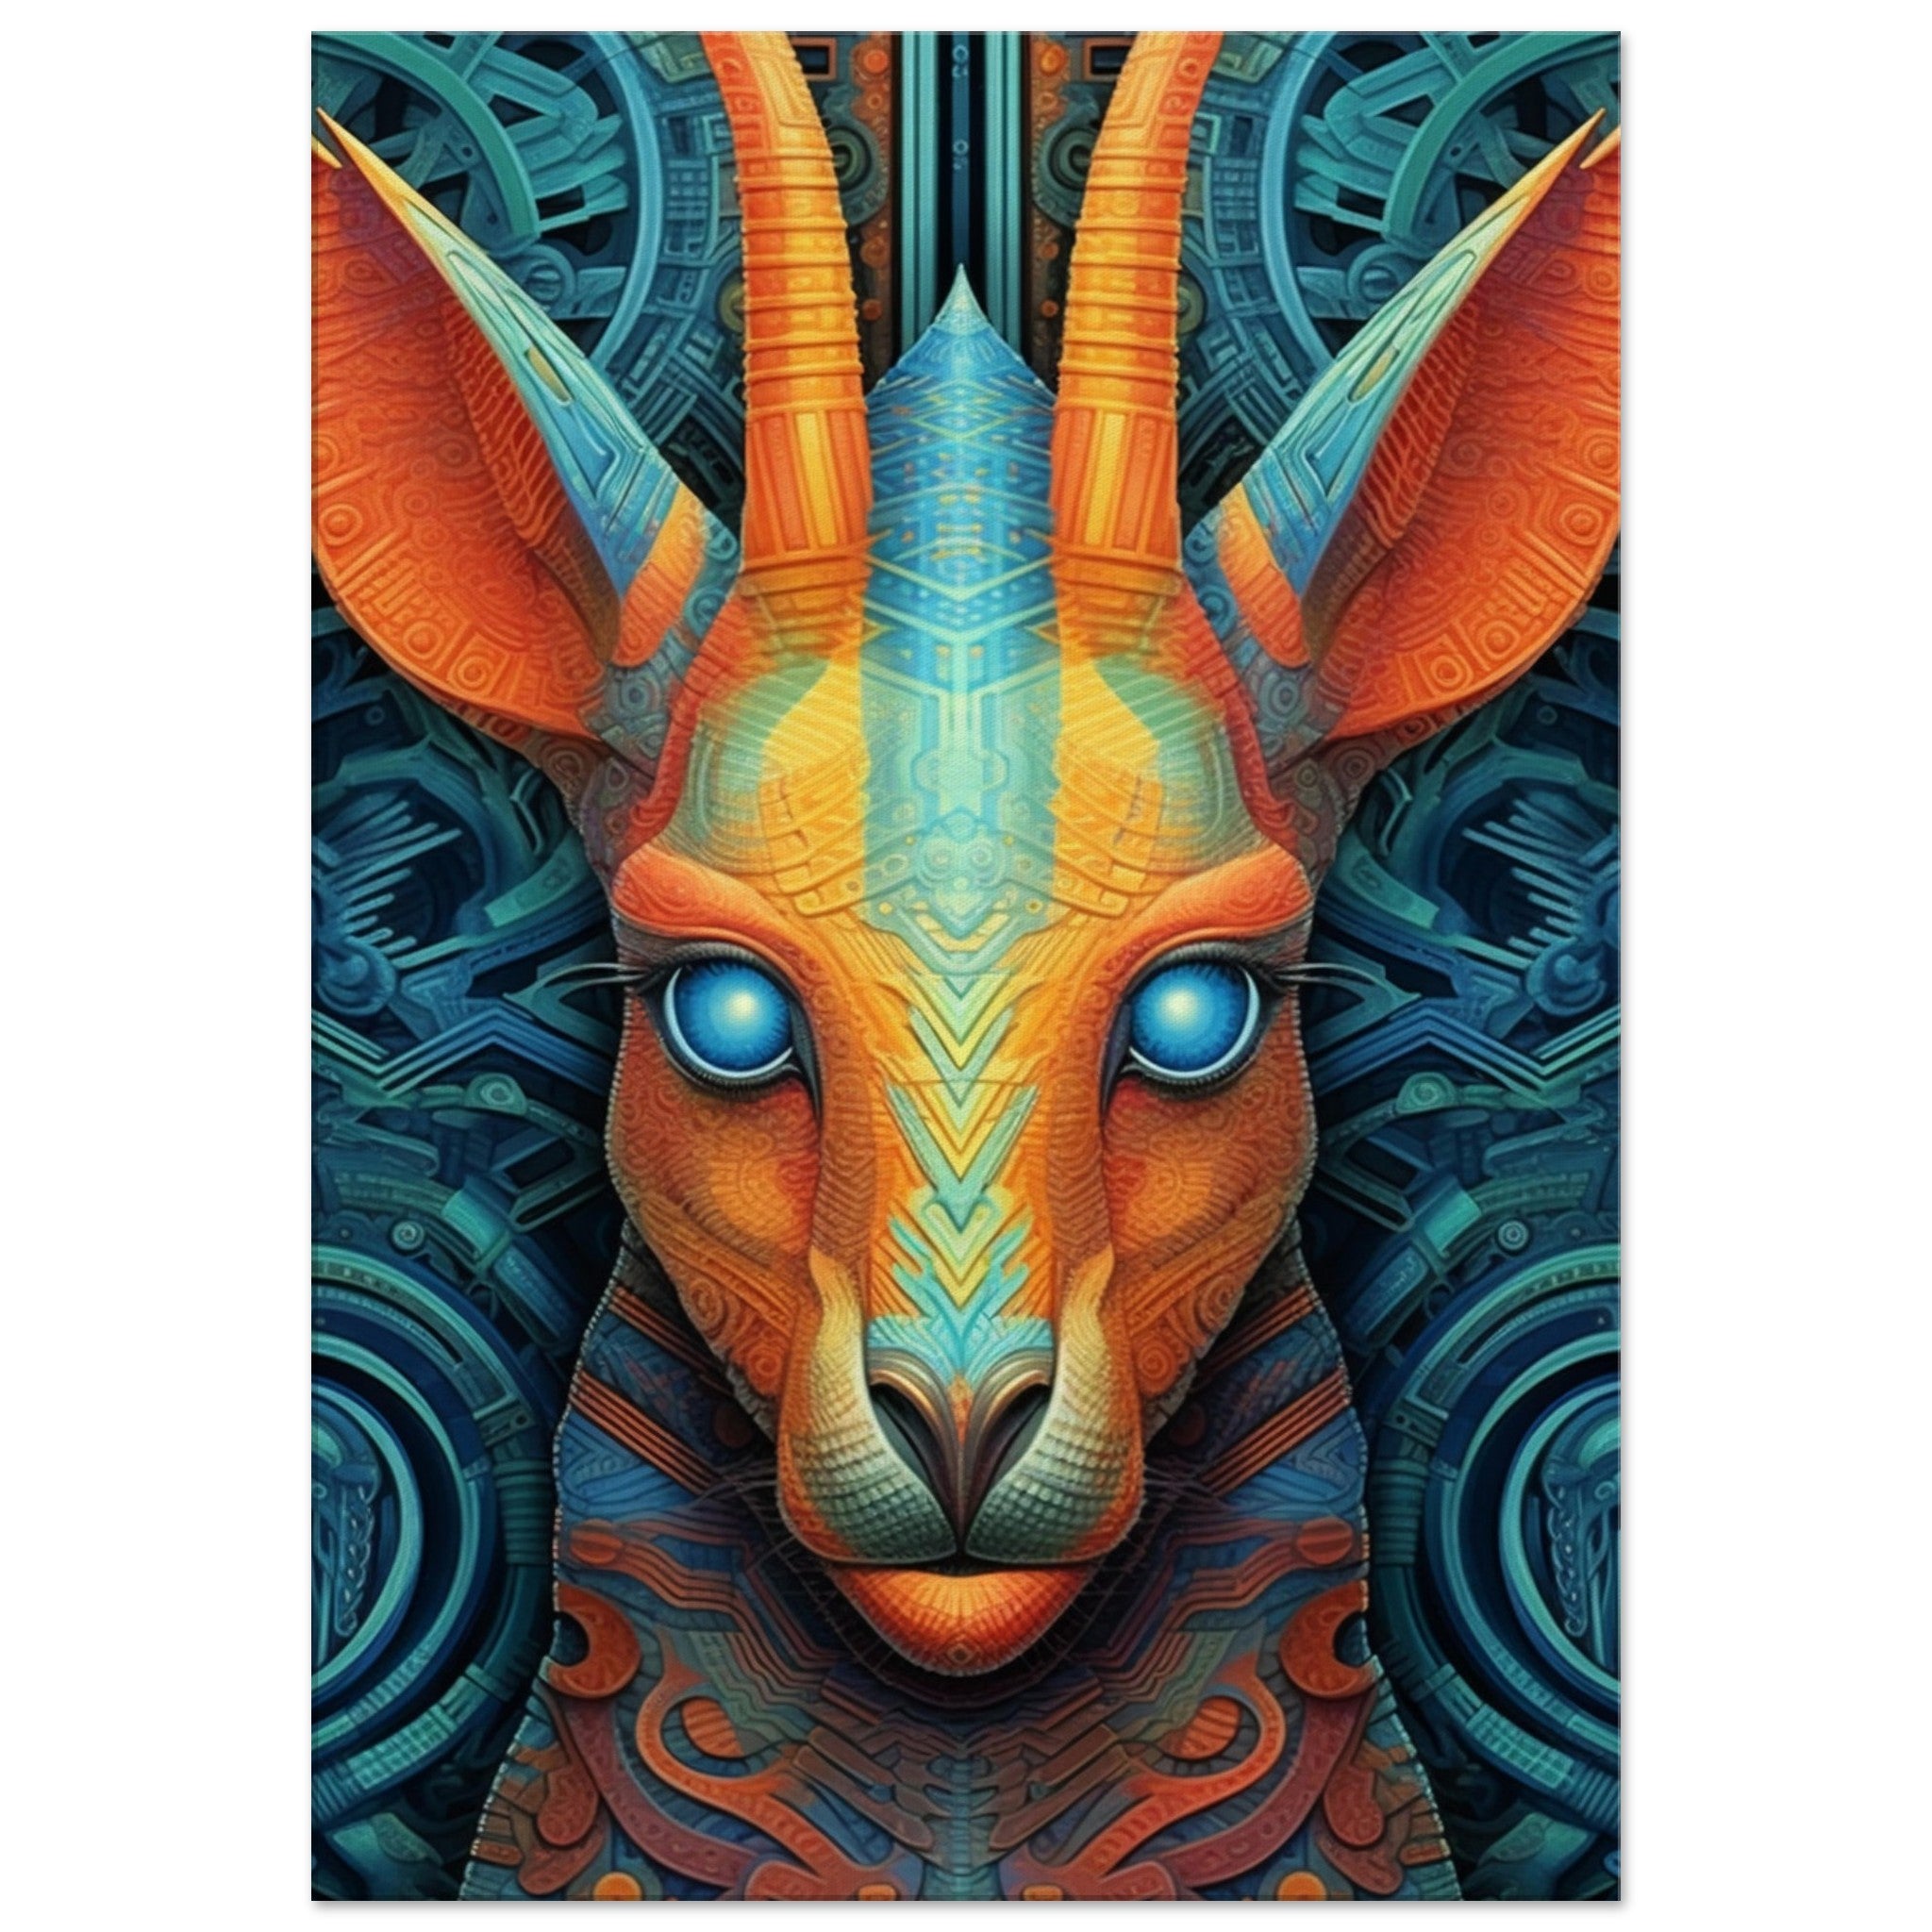 Geometric Alian kangaroo face - immersiarts